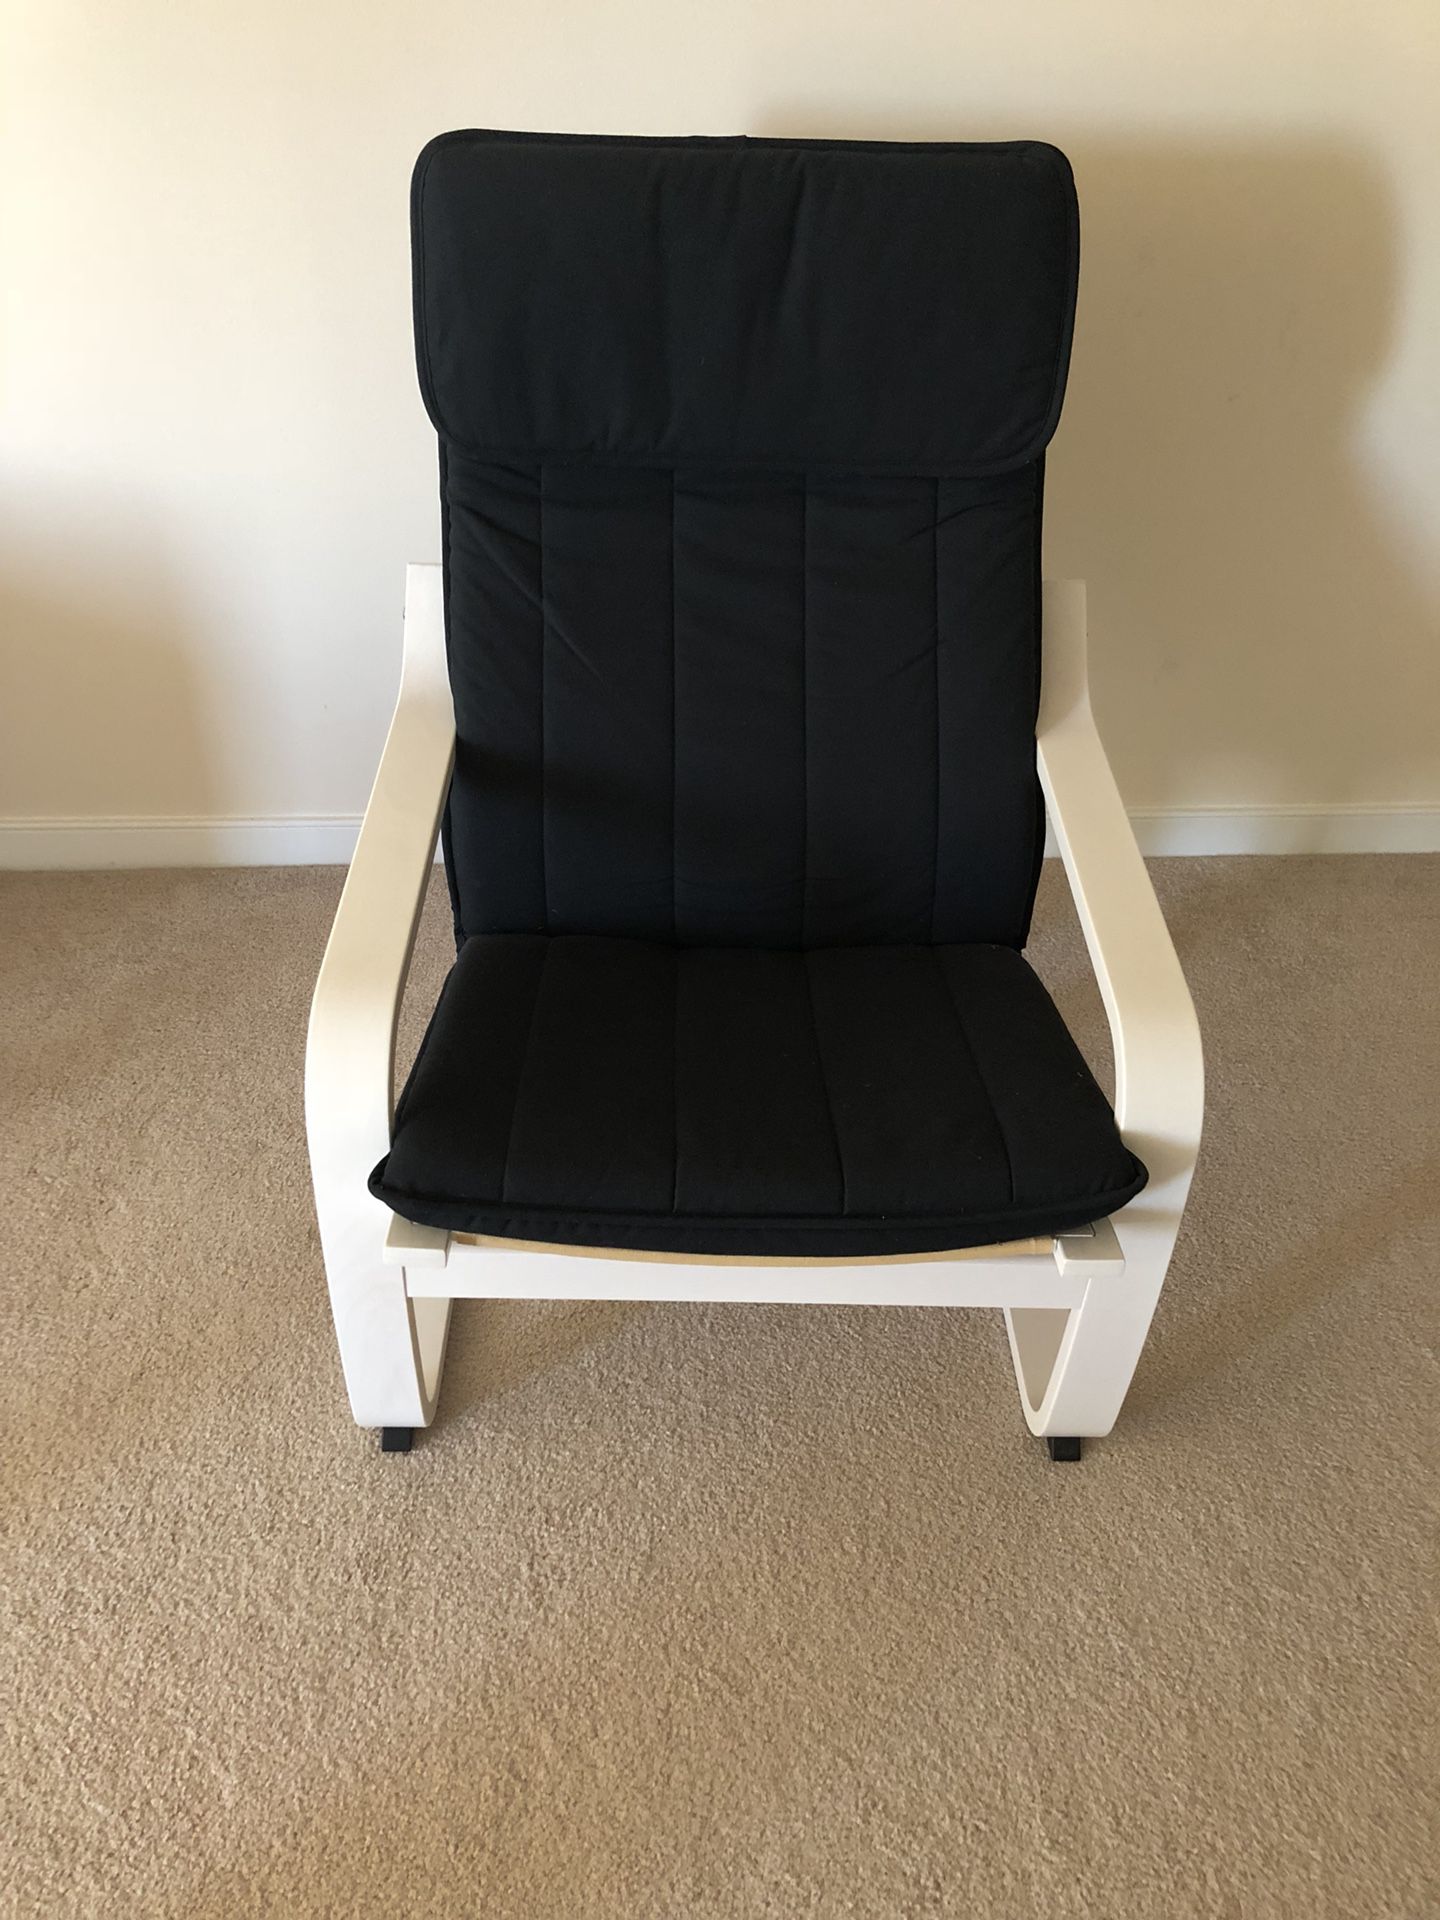 IKEA Poang Arm Chair